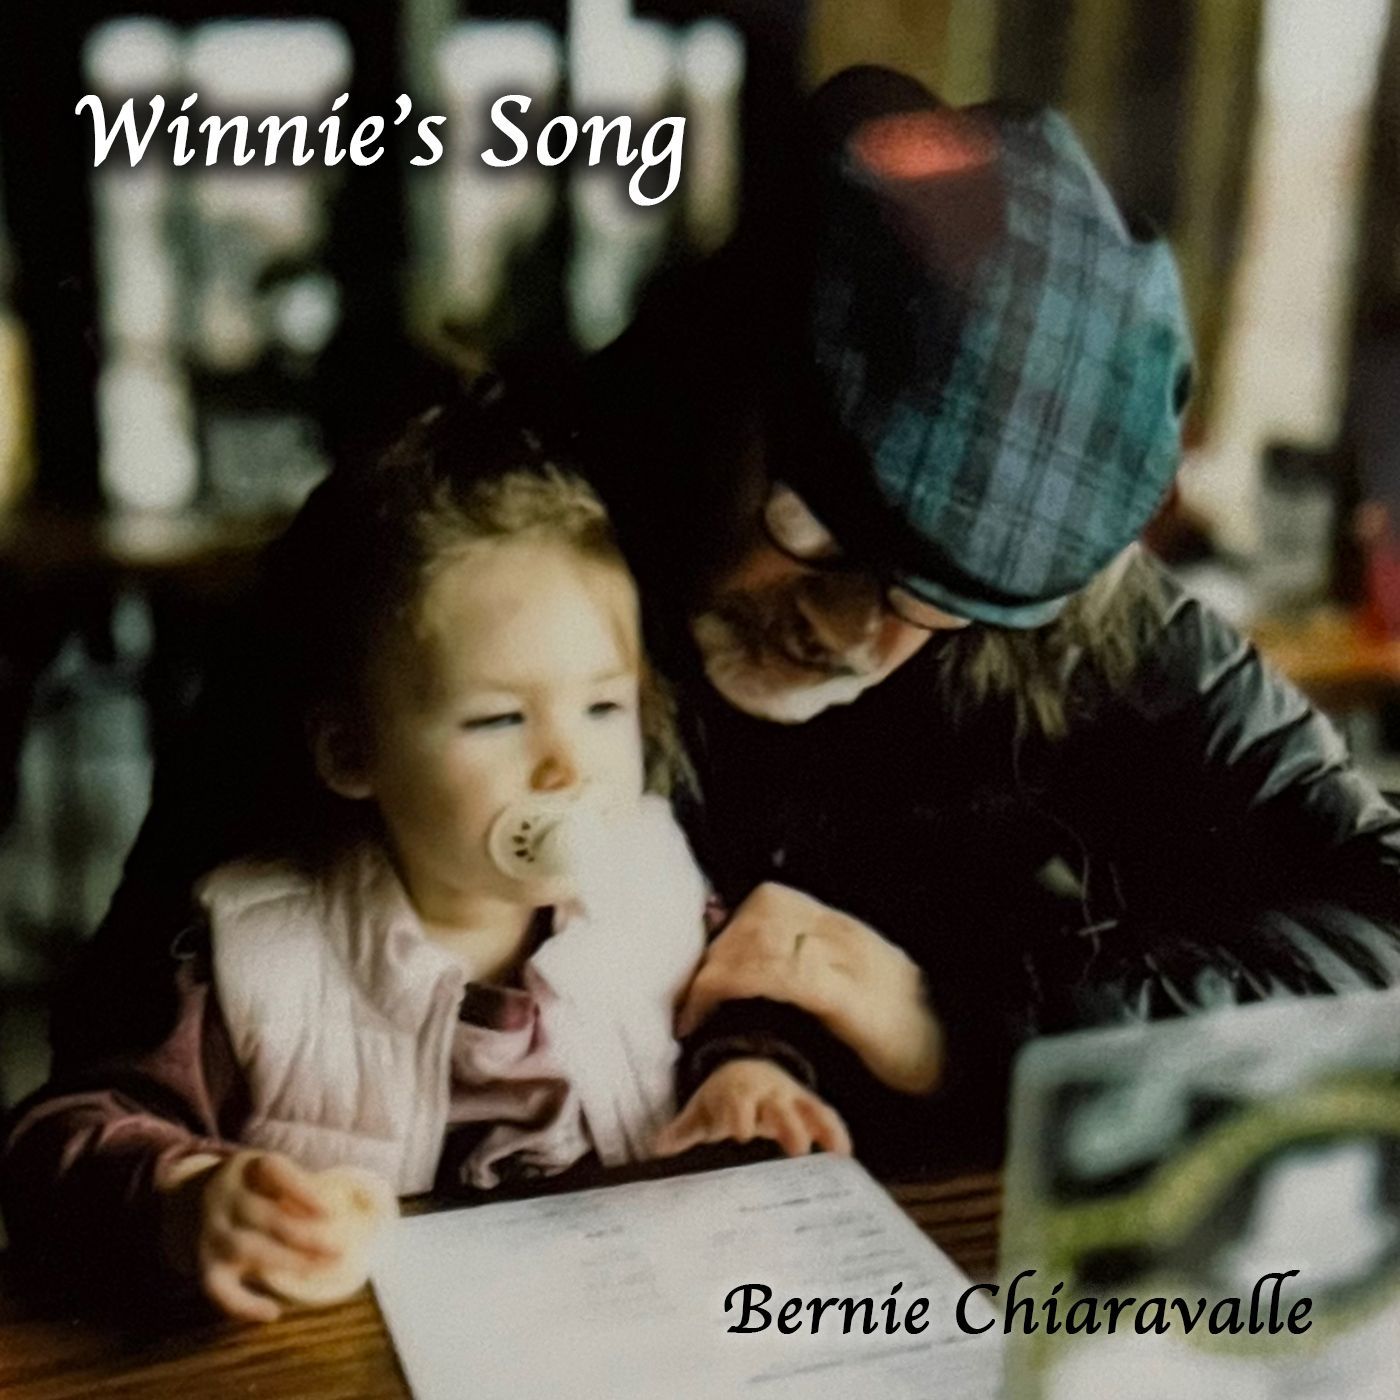 Winnie's Song - Bernie Chiaravalle